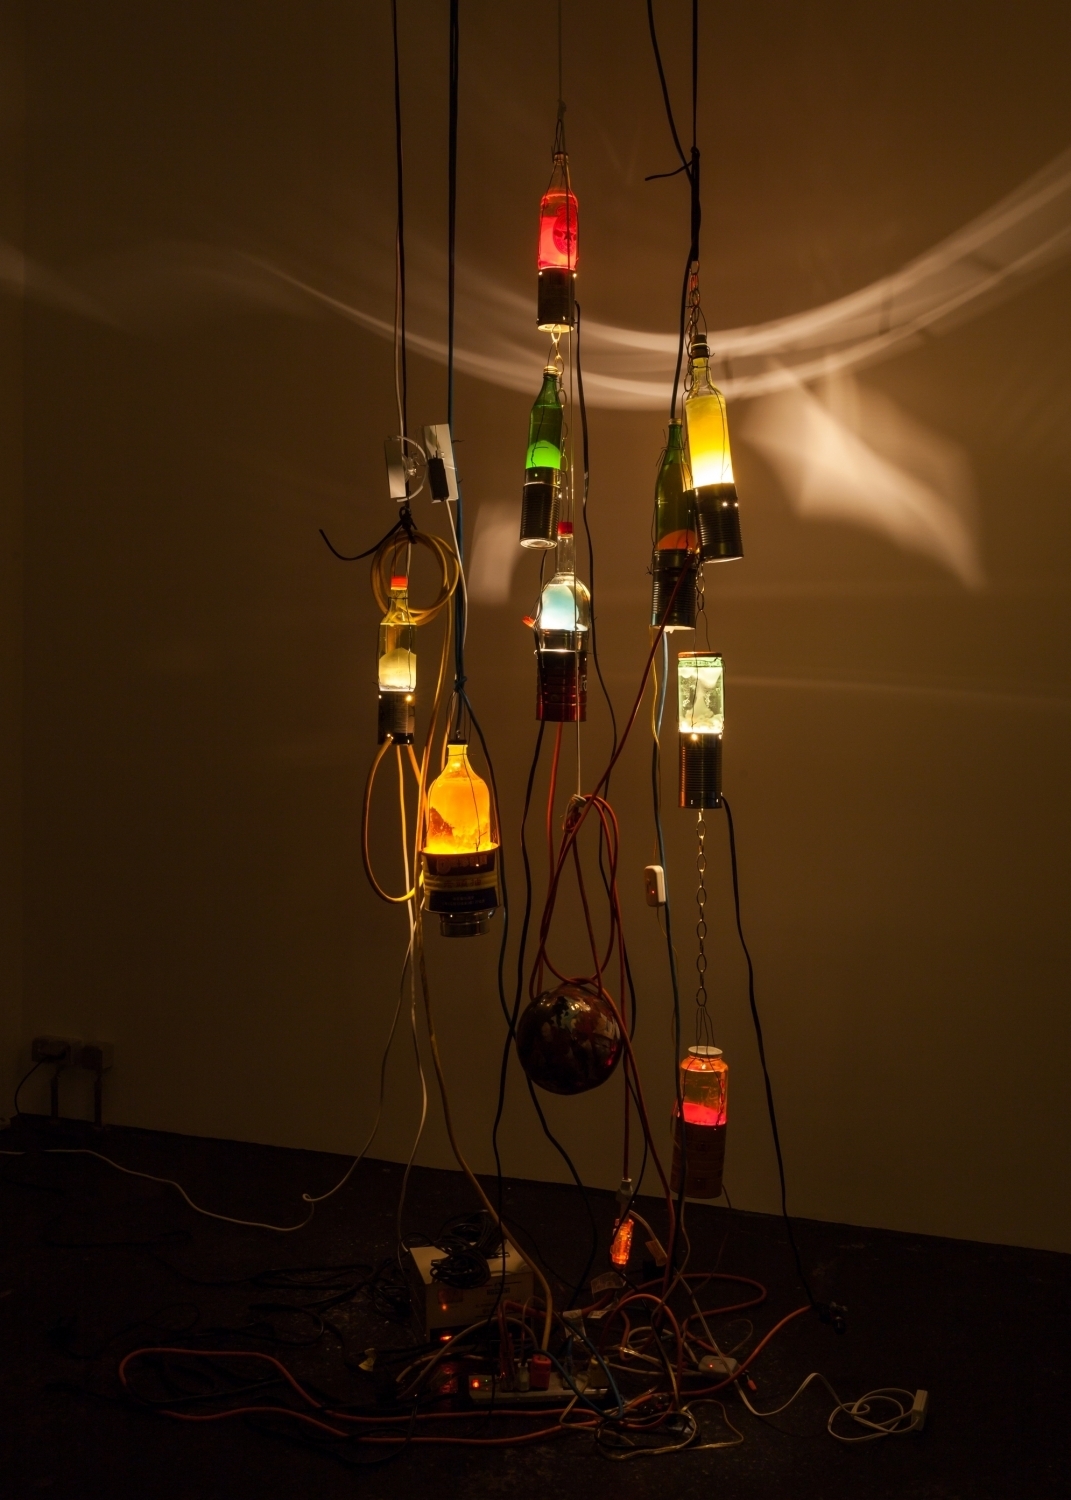 Catharine Ahearn's Lamps